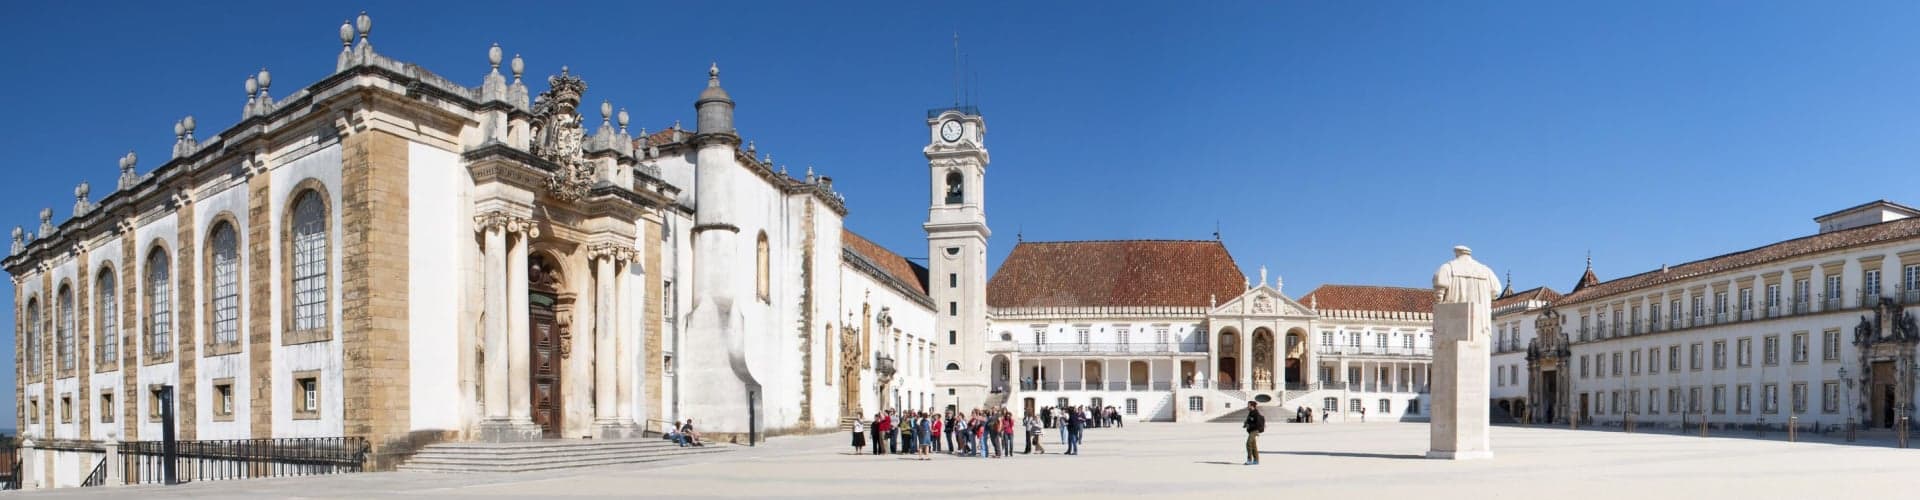 Essential Free Tour Coimbra Banner